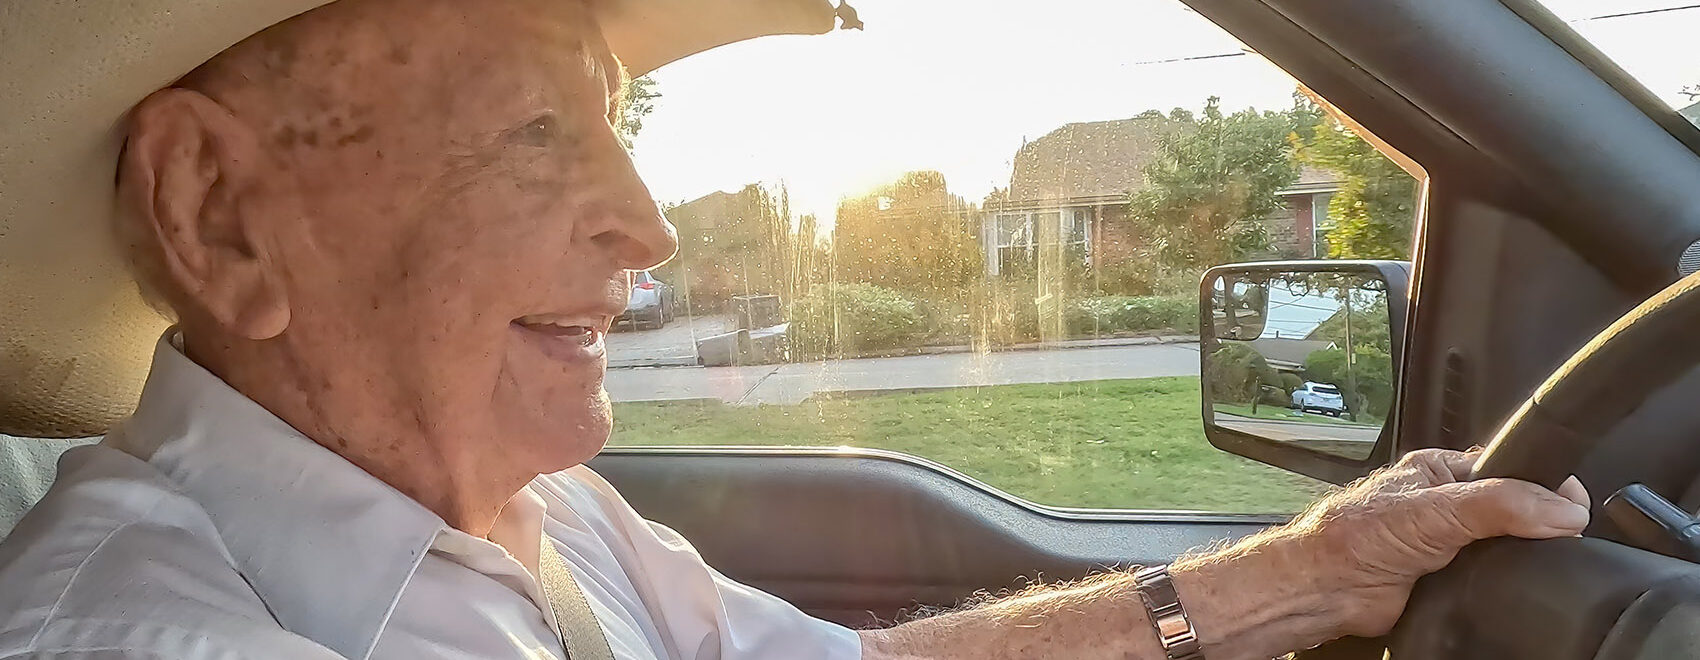 elderly man wearing straw hat driving vehicle